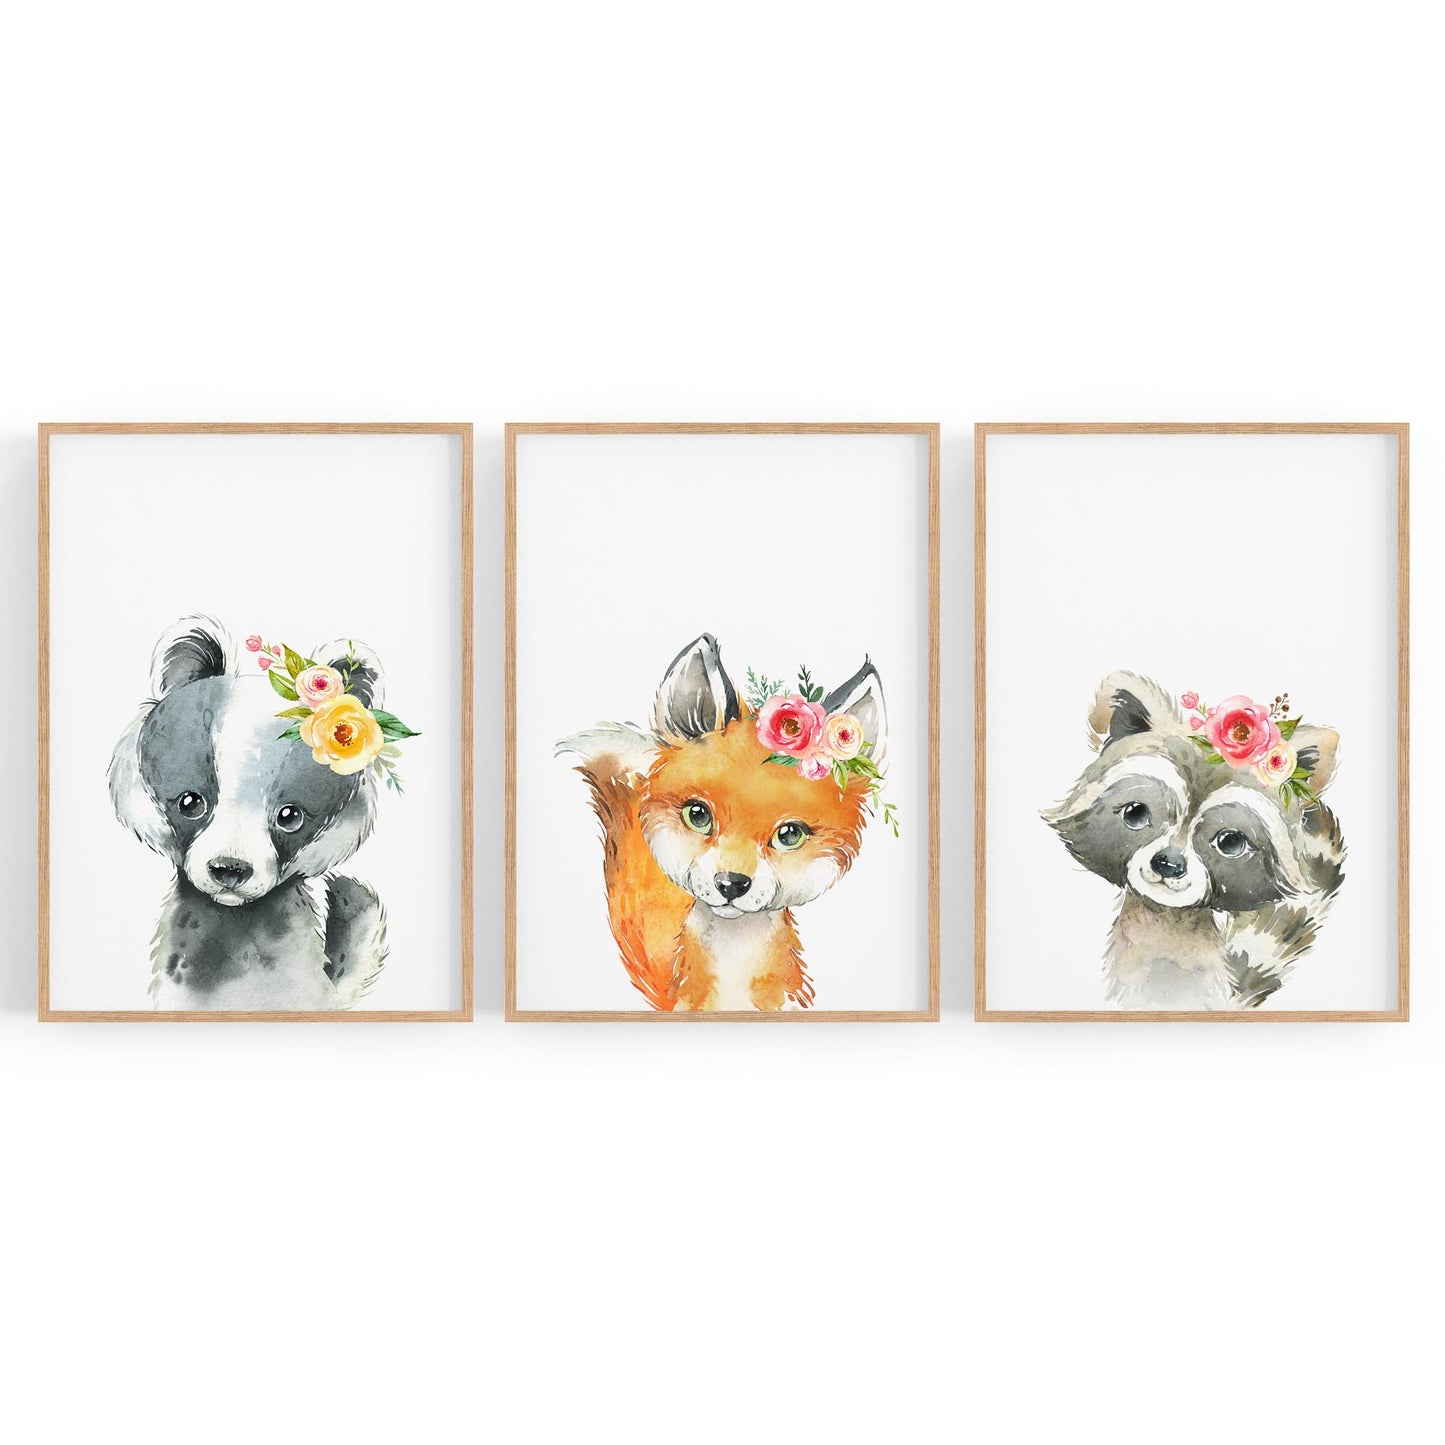 Set of Cute Baby Woodland Animals Nursery Wall Art #2 - The Affordable Art Company